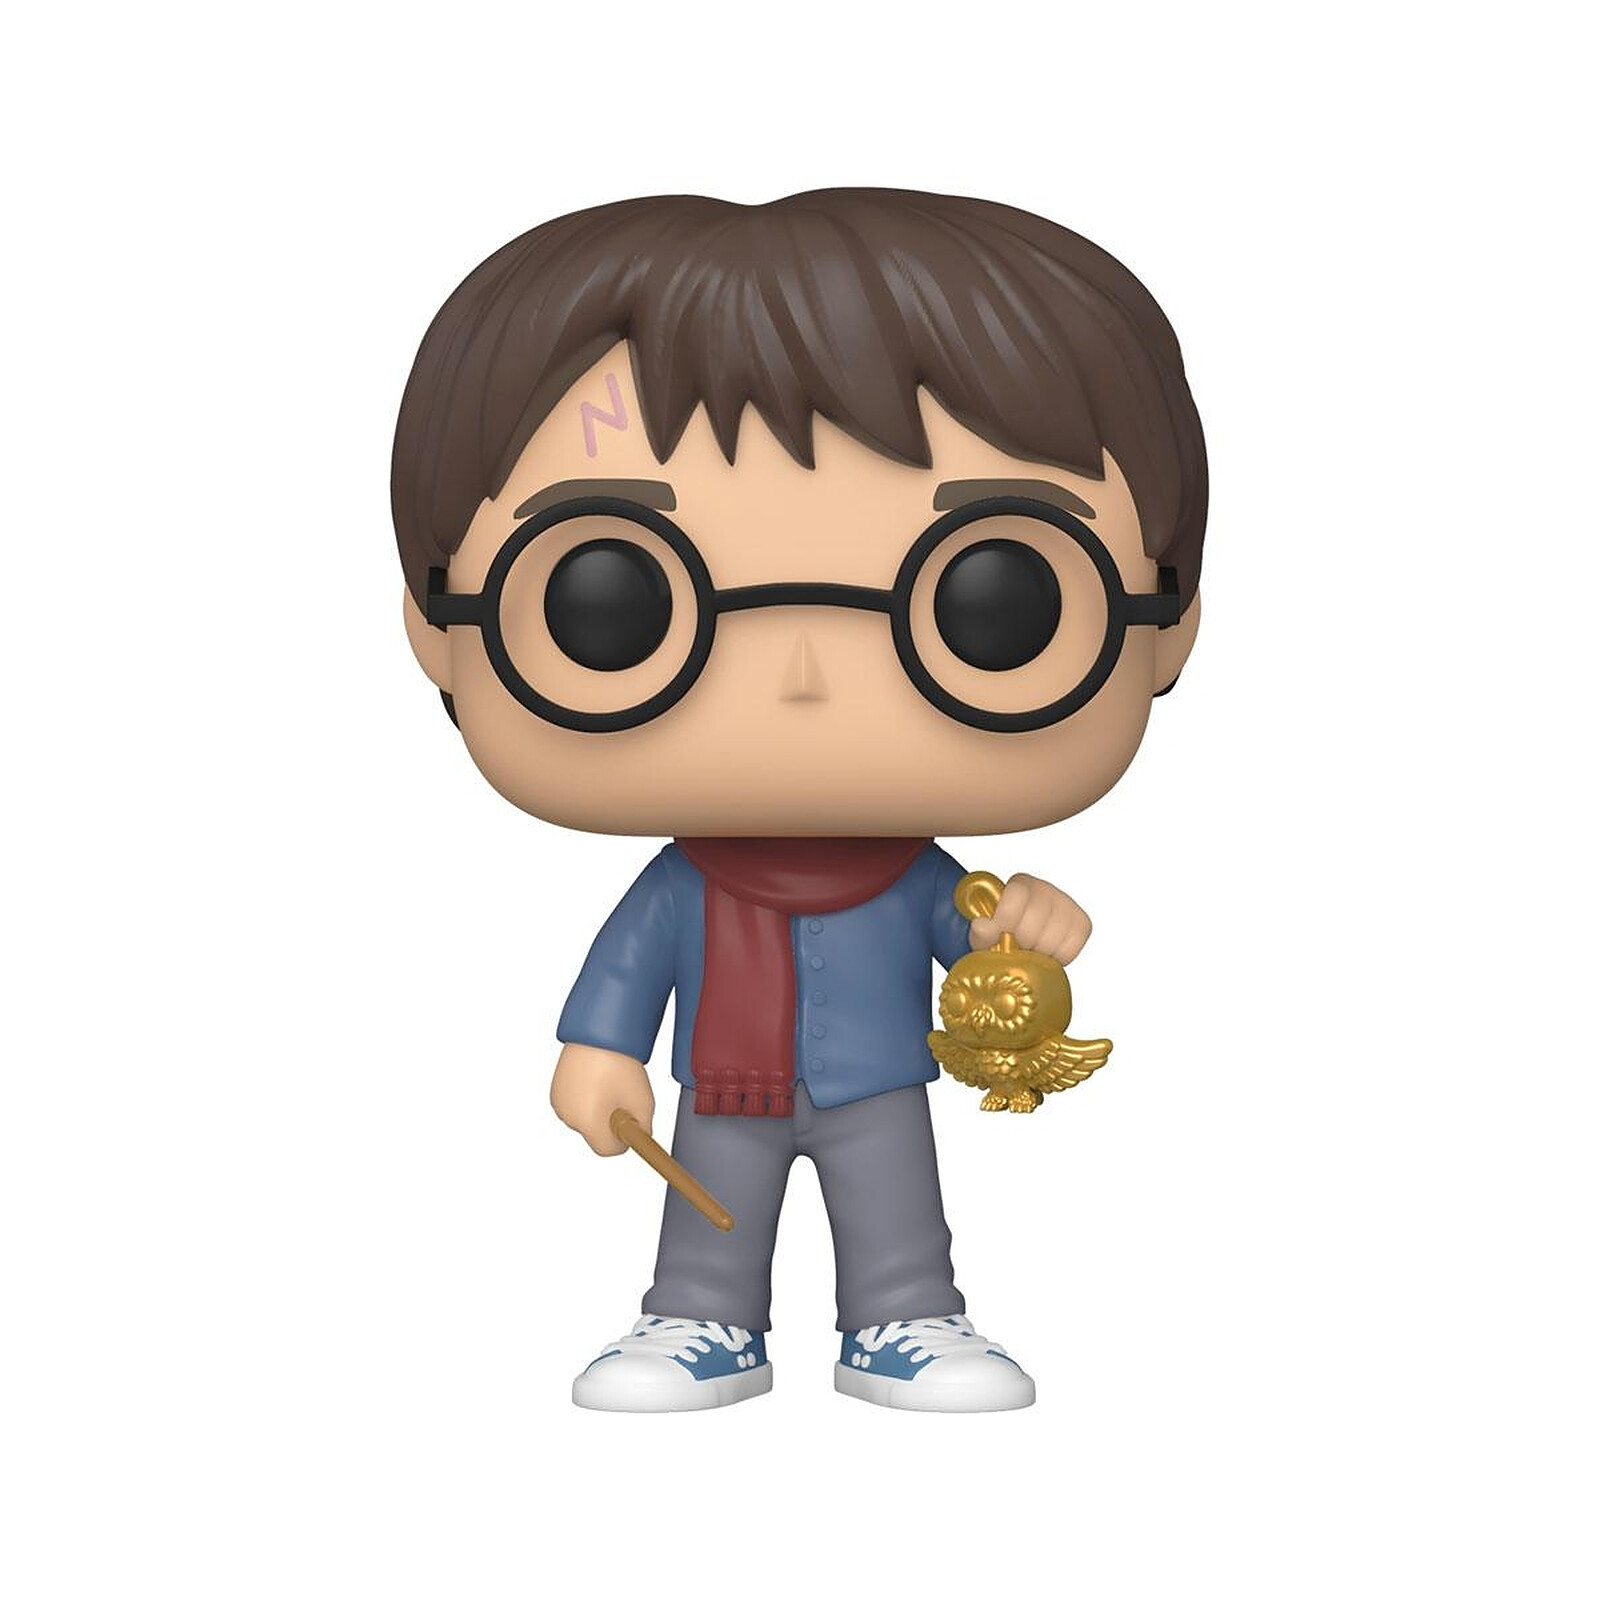 Harry Potter - Figurine POP! Harry Potter Holiday 9 cm - Figurines - LDLC